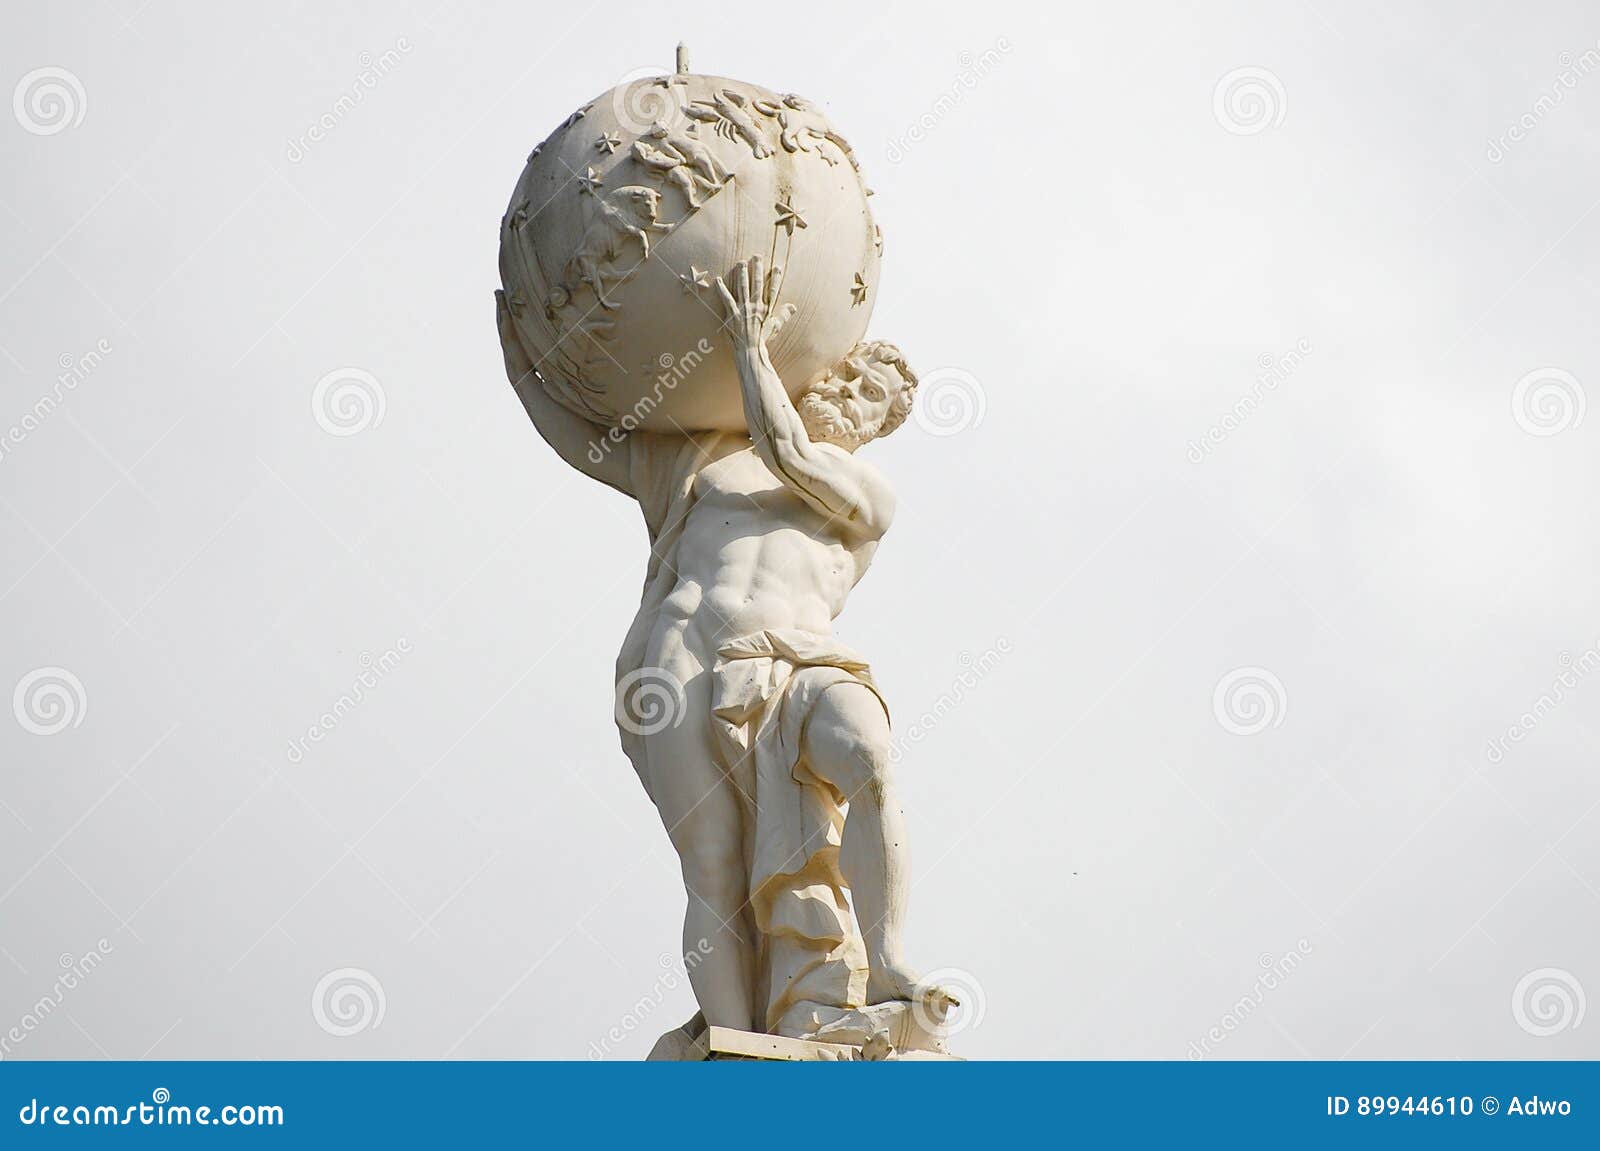 atlas god statue